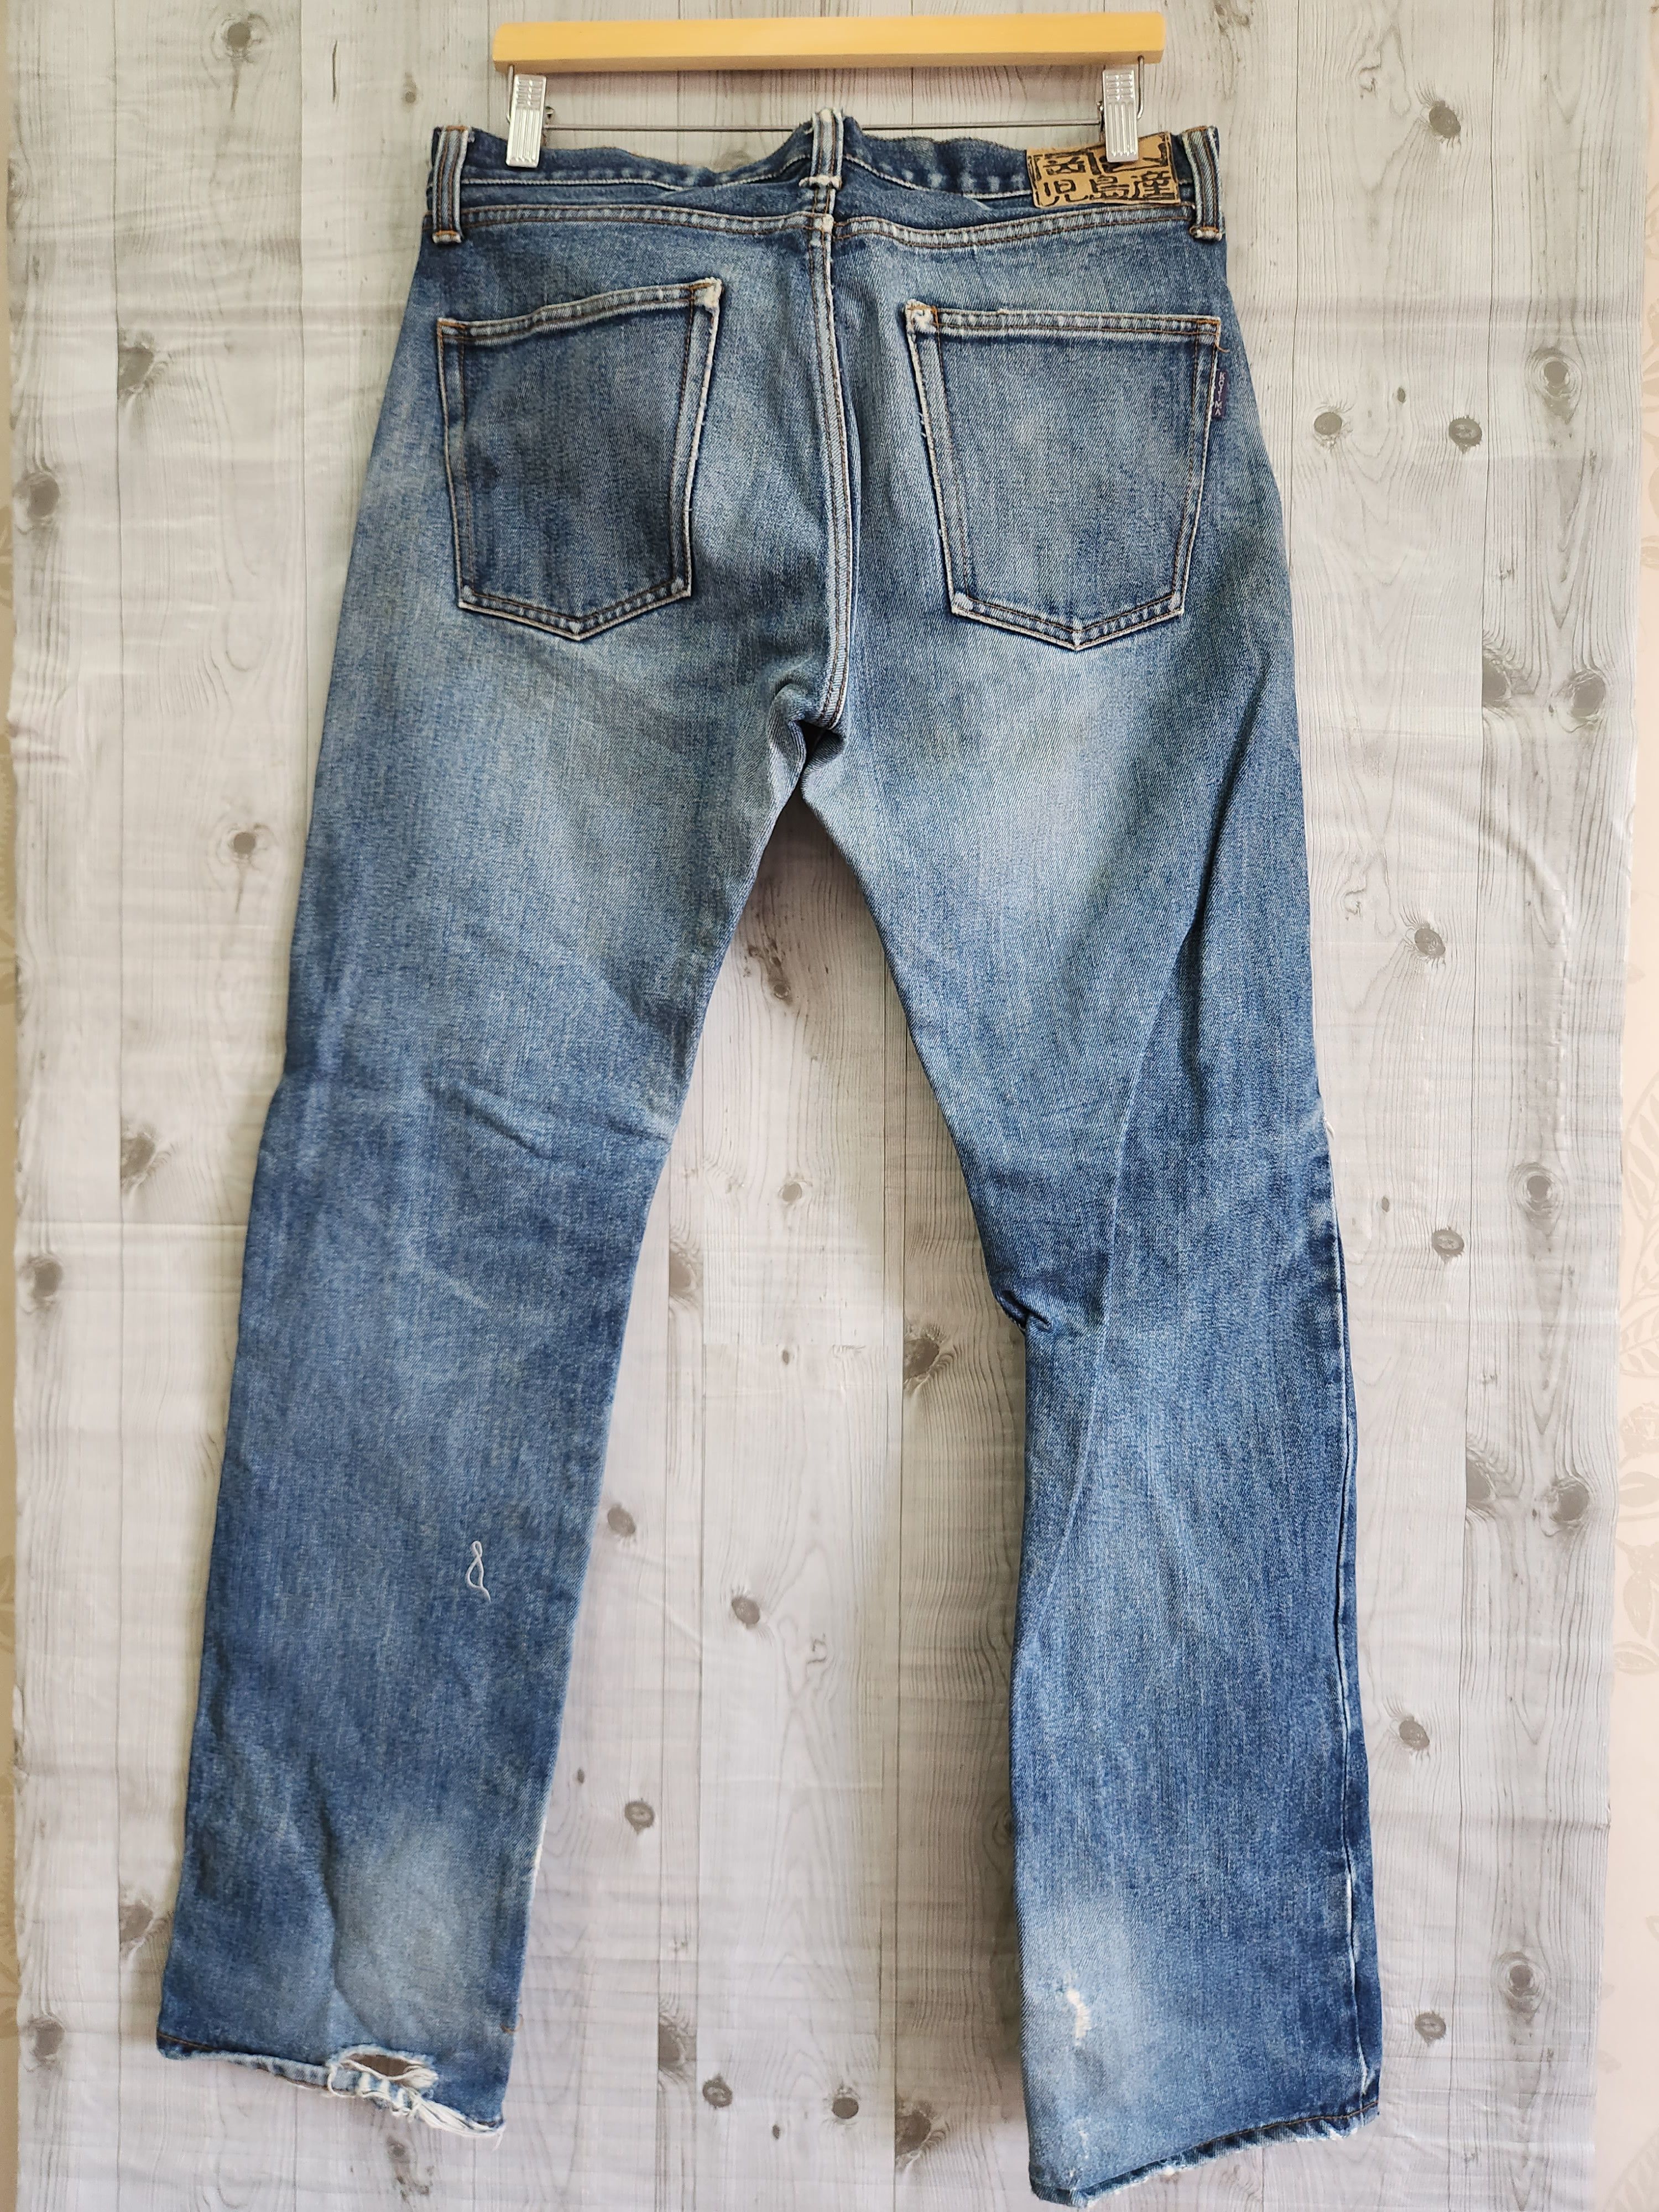 Japan Blue - Kojima Genes Japan Vintage Denim Blue Jeans Ripped - 21